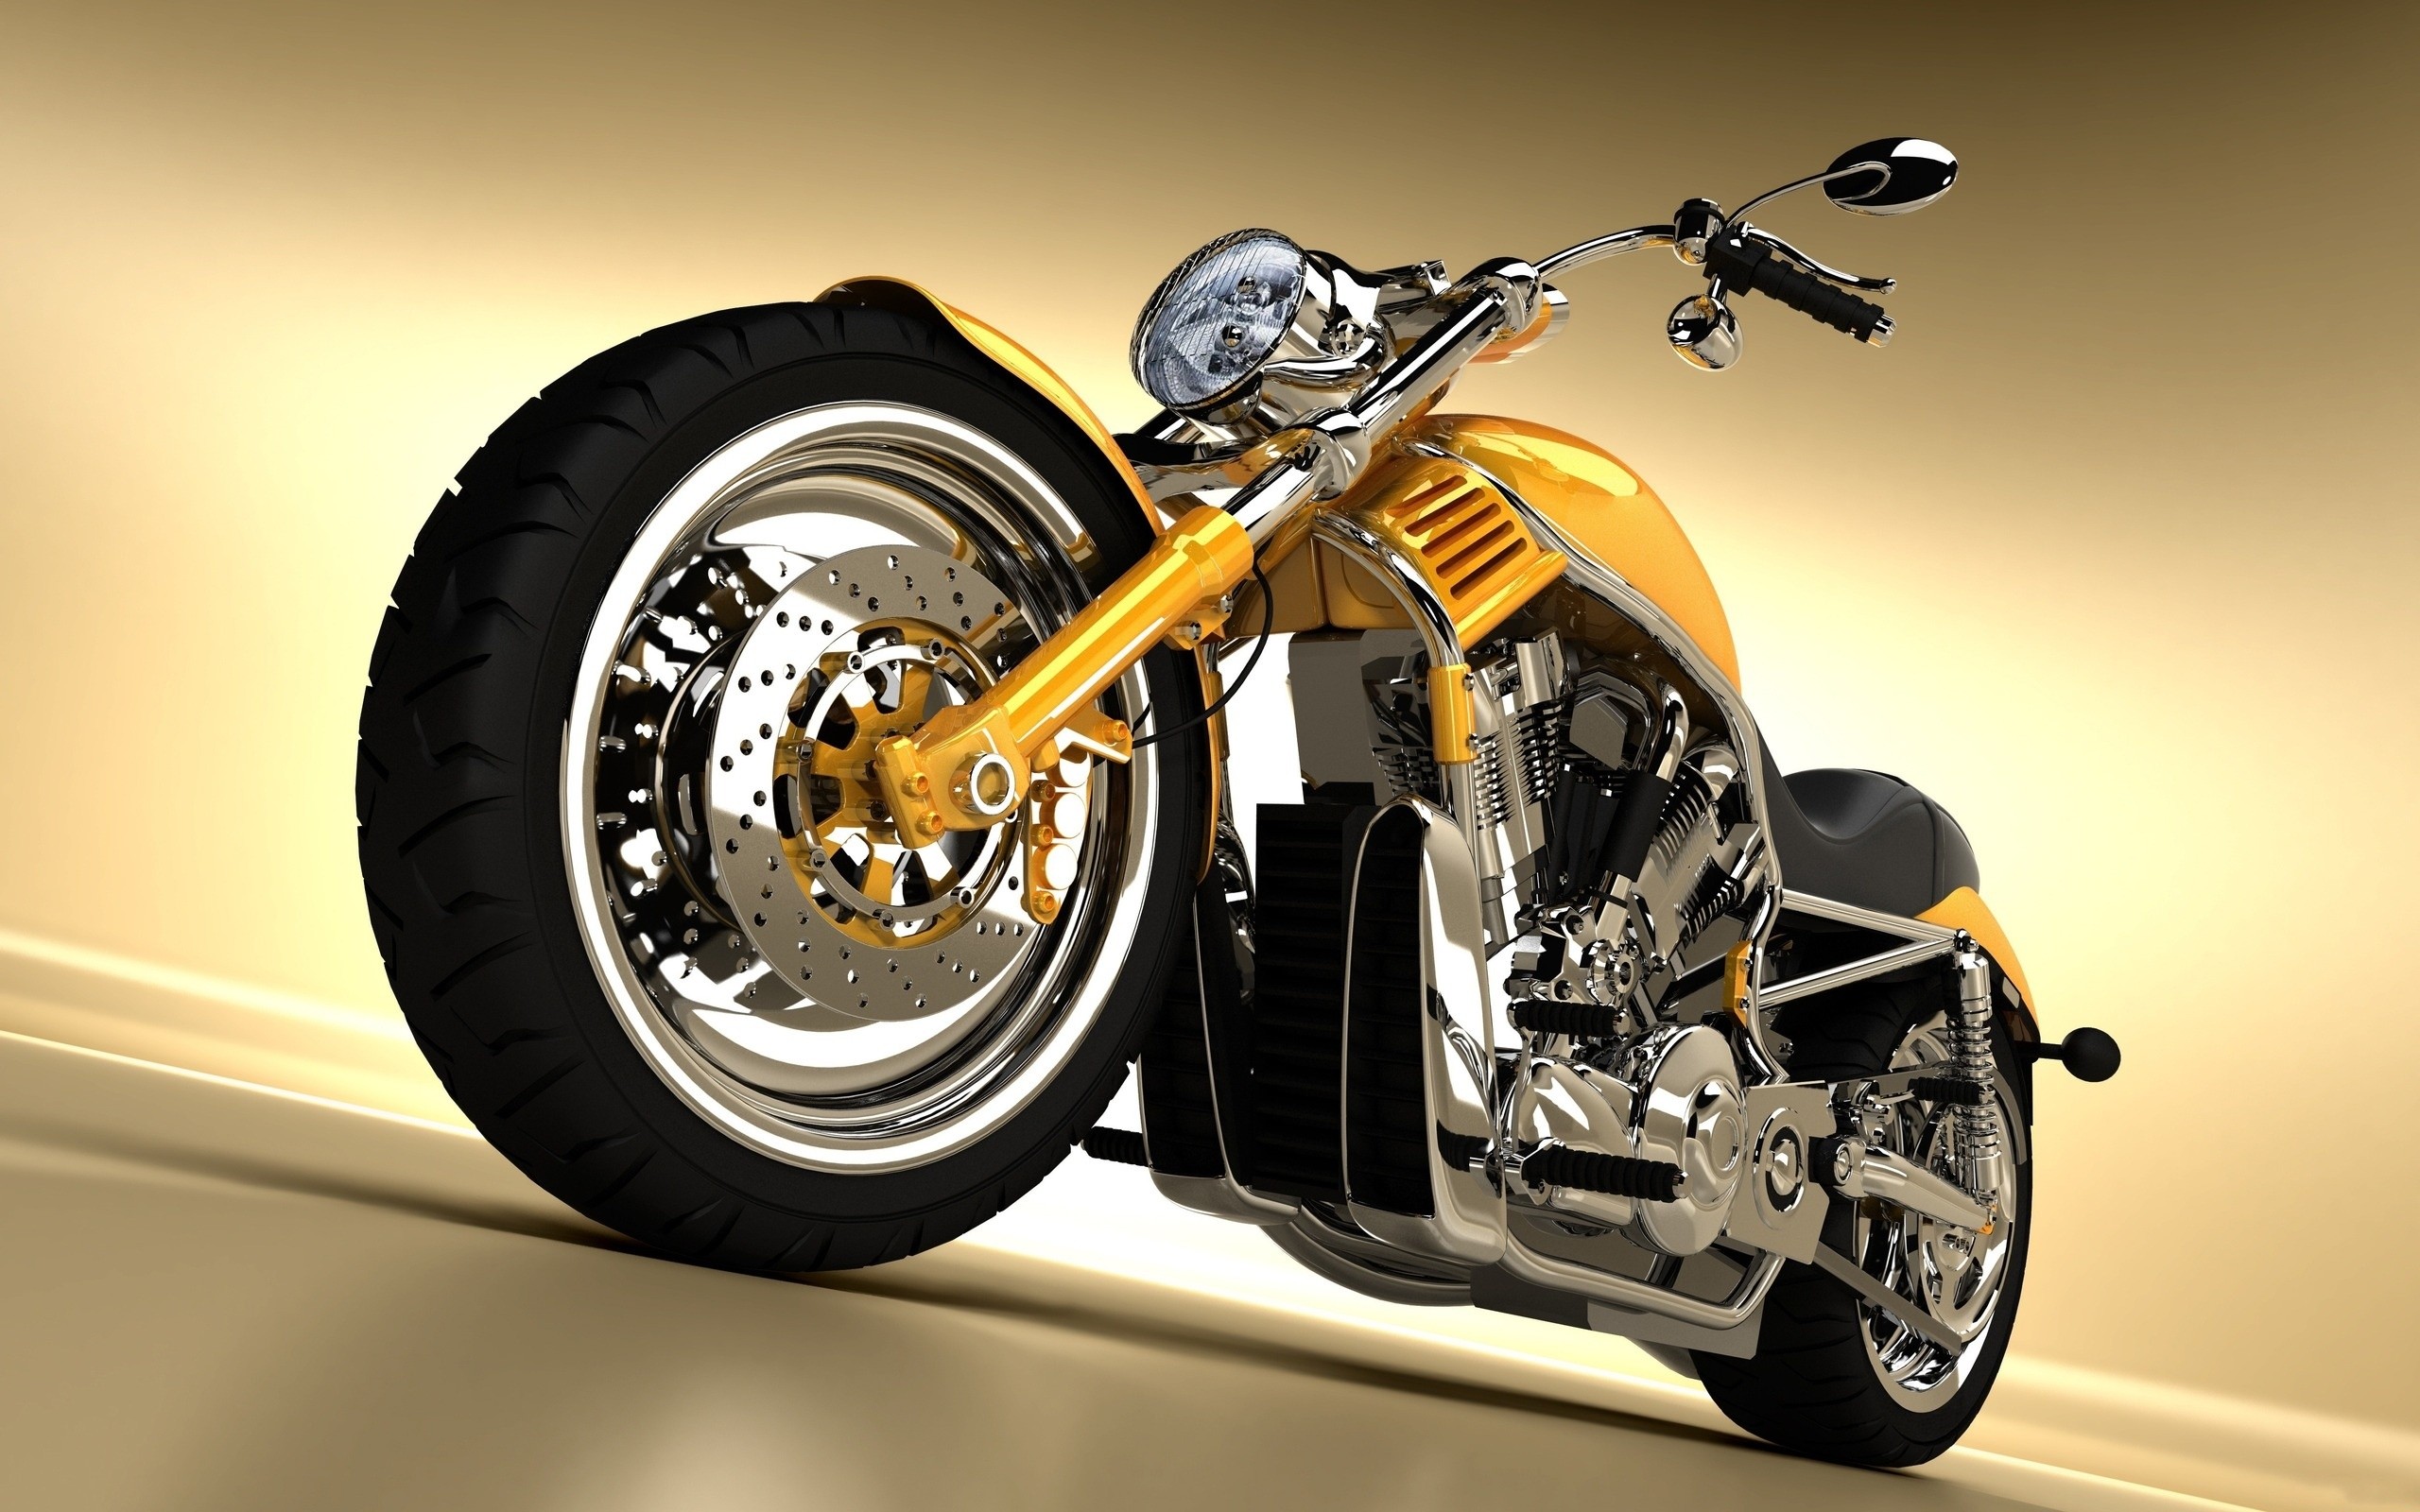 2560x1600 yellow-bmw-bike-high-resolution-wallpaper-desktop-download-photo-free.jpg  2,560Ã1,600 pixels | Motorcycle | Pinterest | Yamaha motorcycles, ...